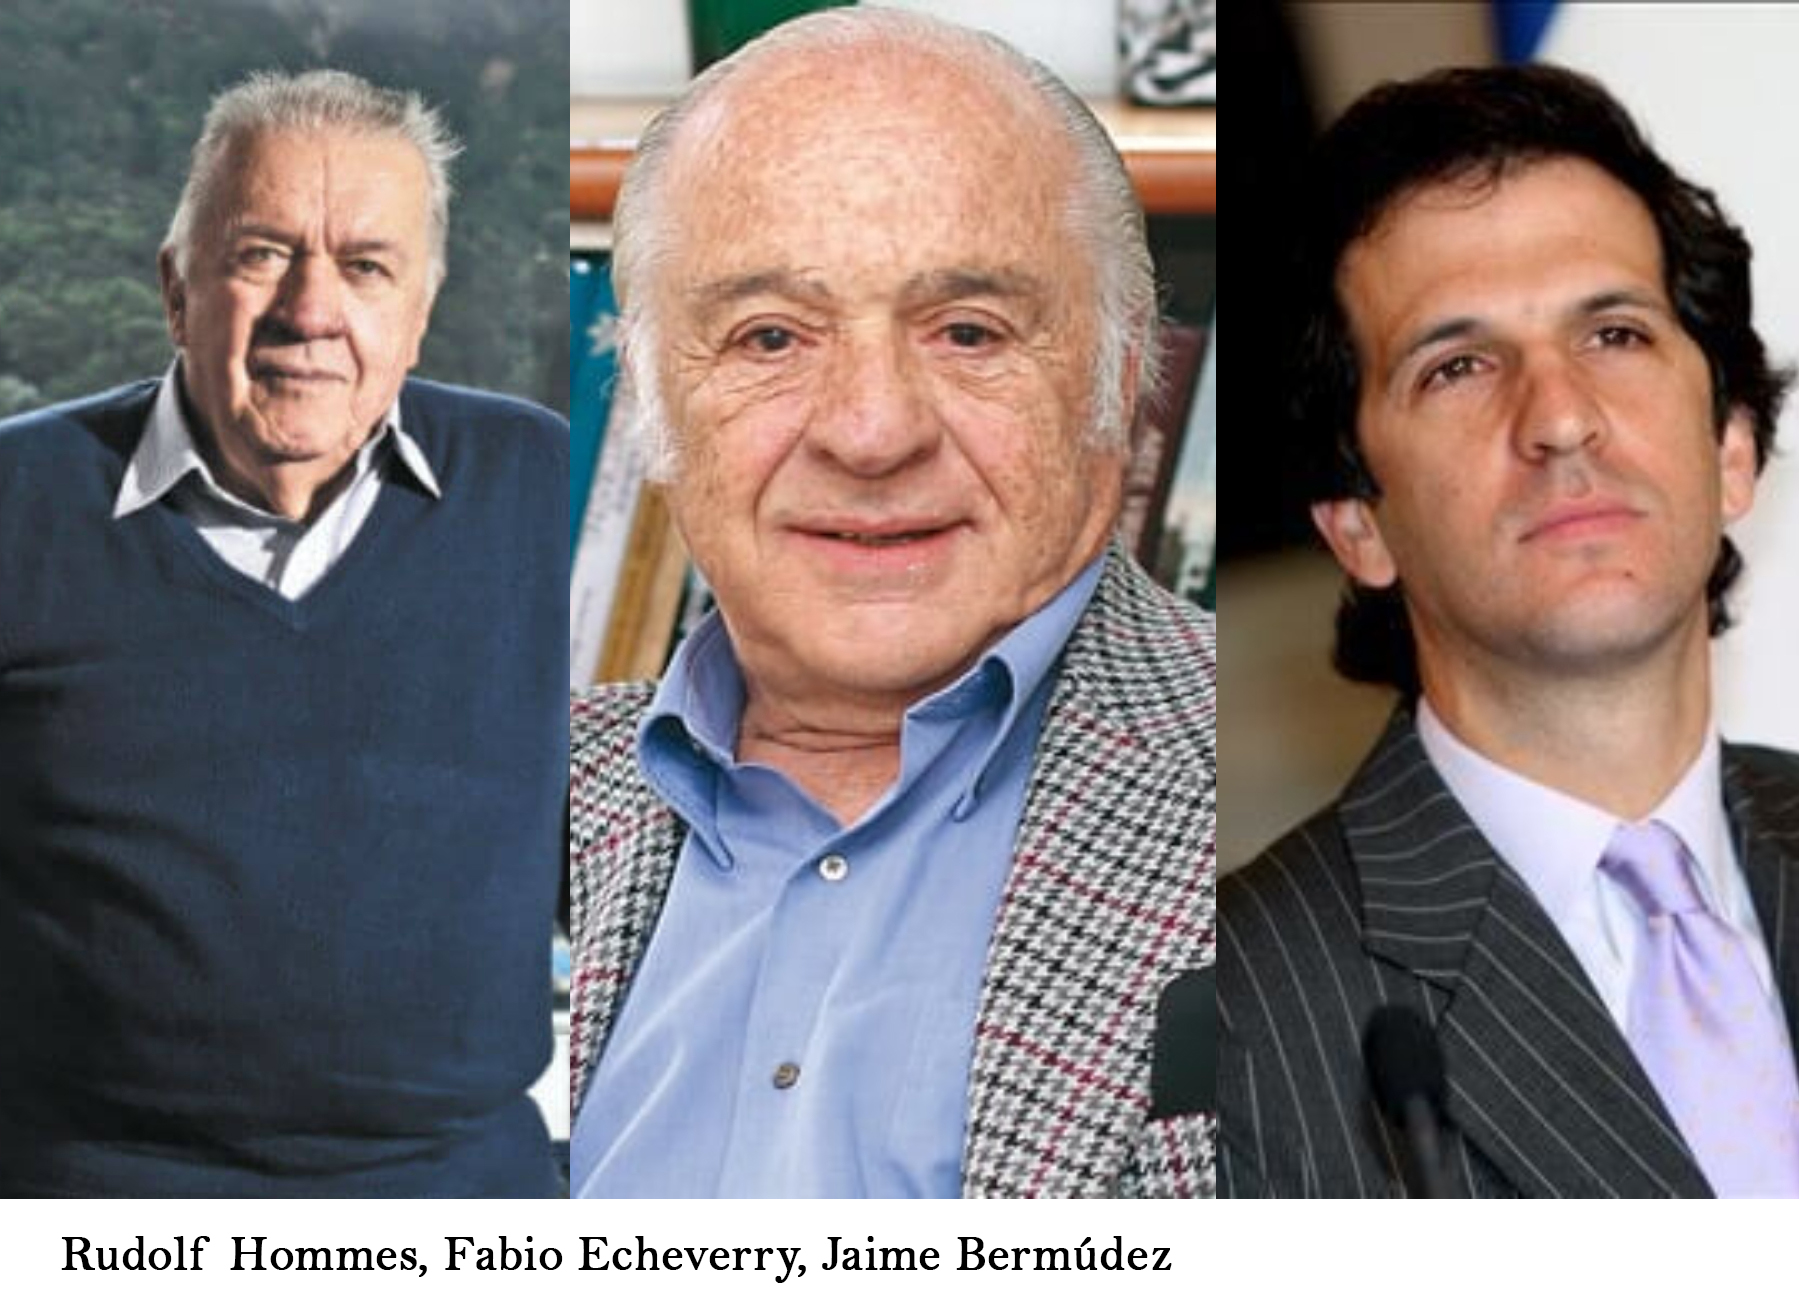 Rudolf Hommes, Fabio Echeverry, Jaime Bermúdez